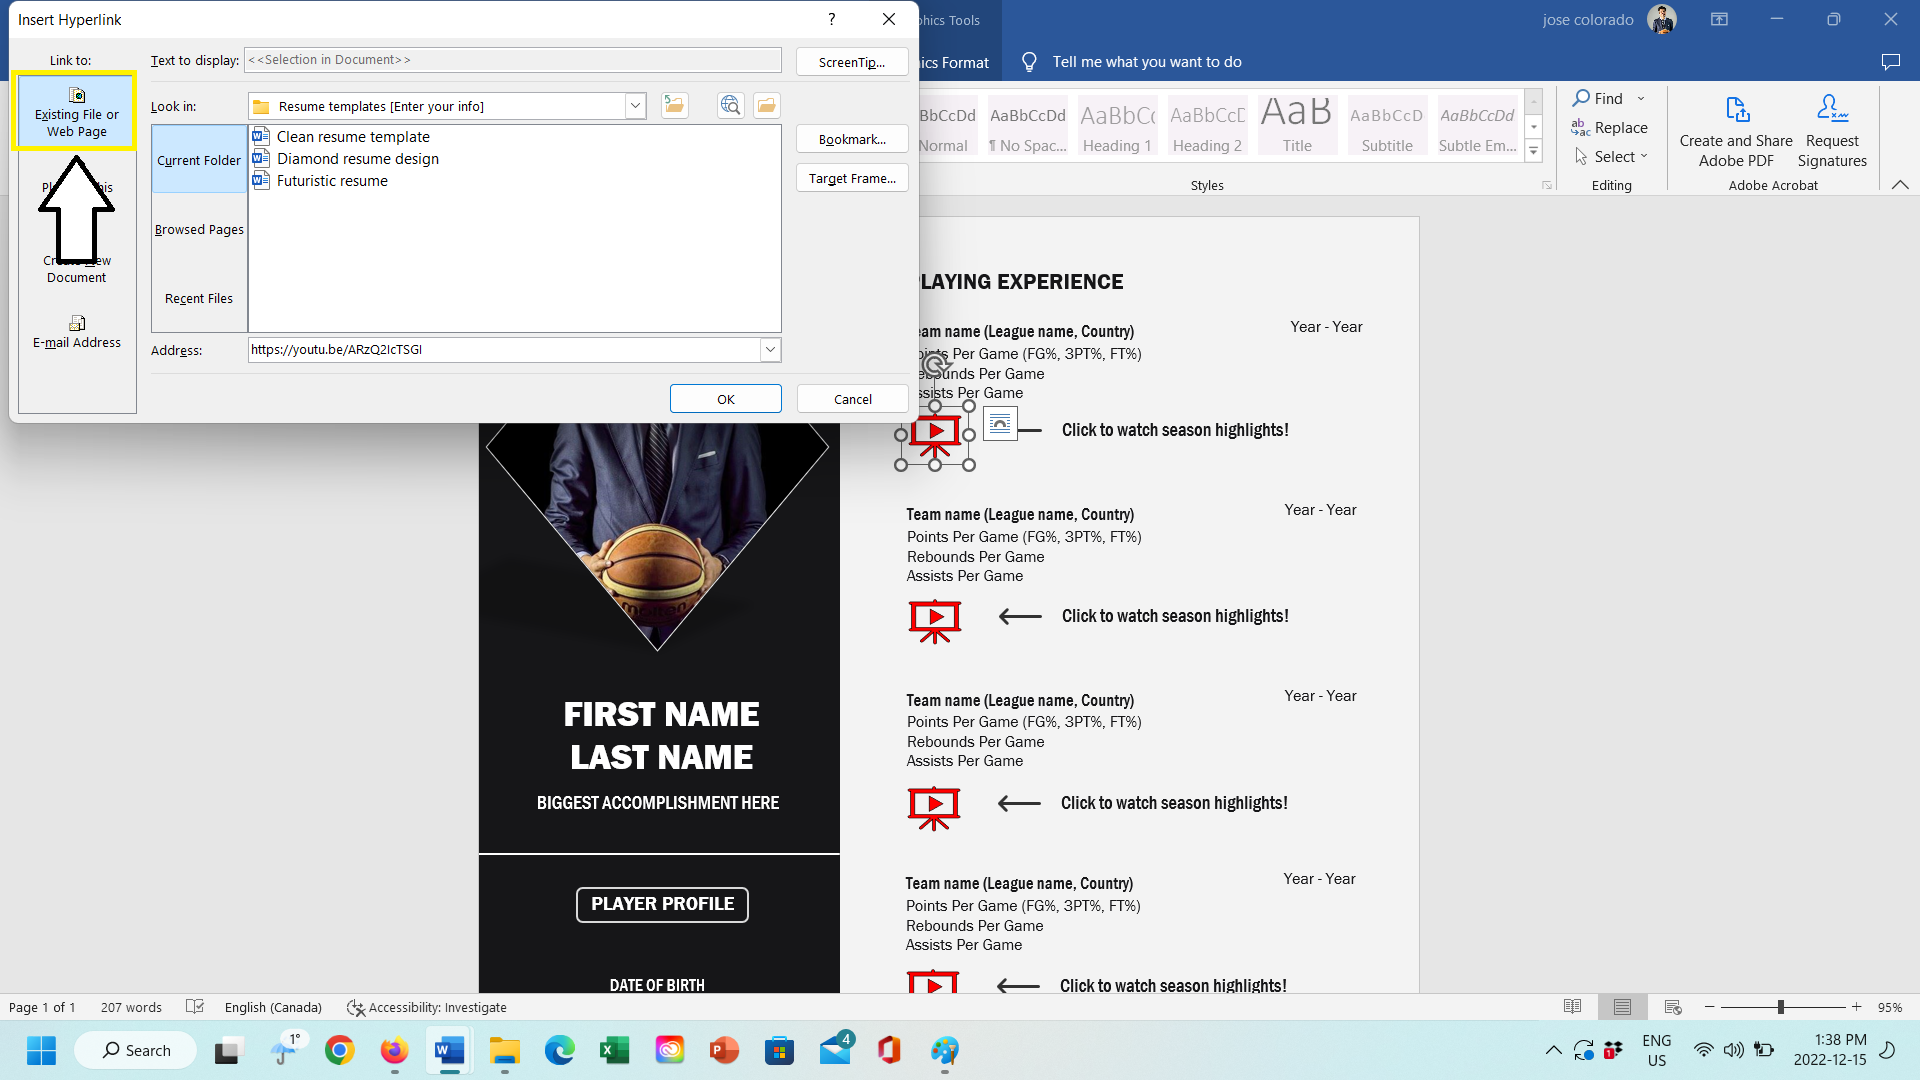 Jose Colorado provides basketball resume templates for basketball players.